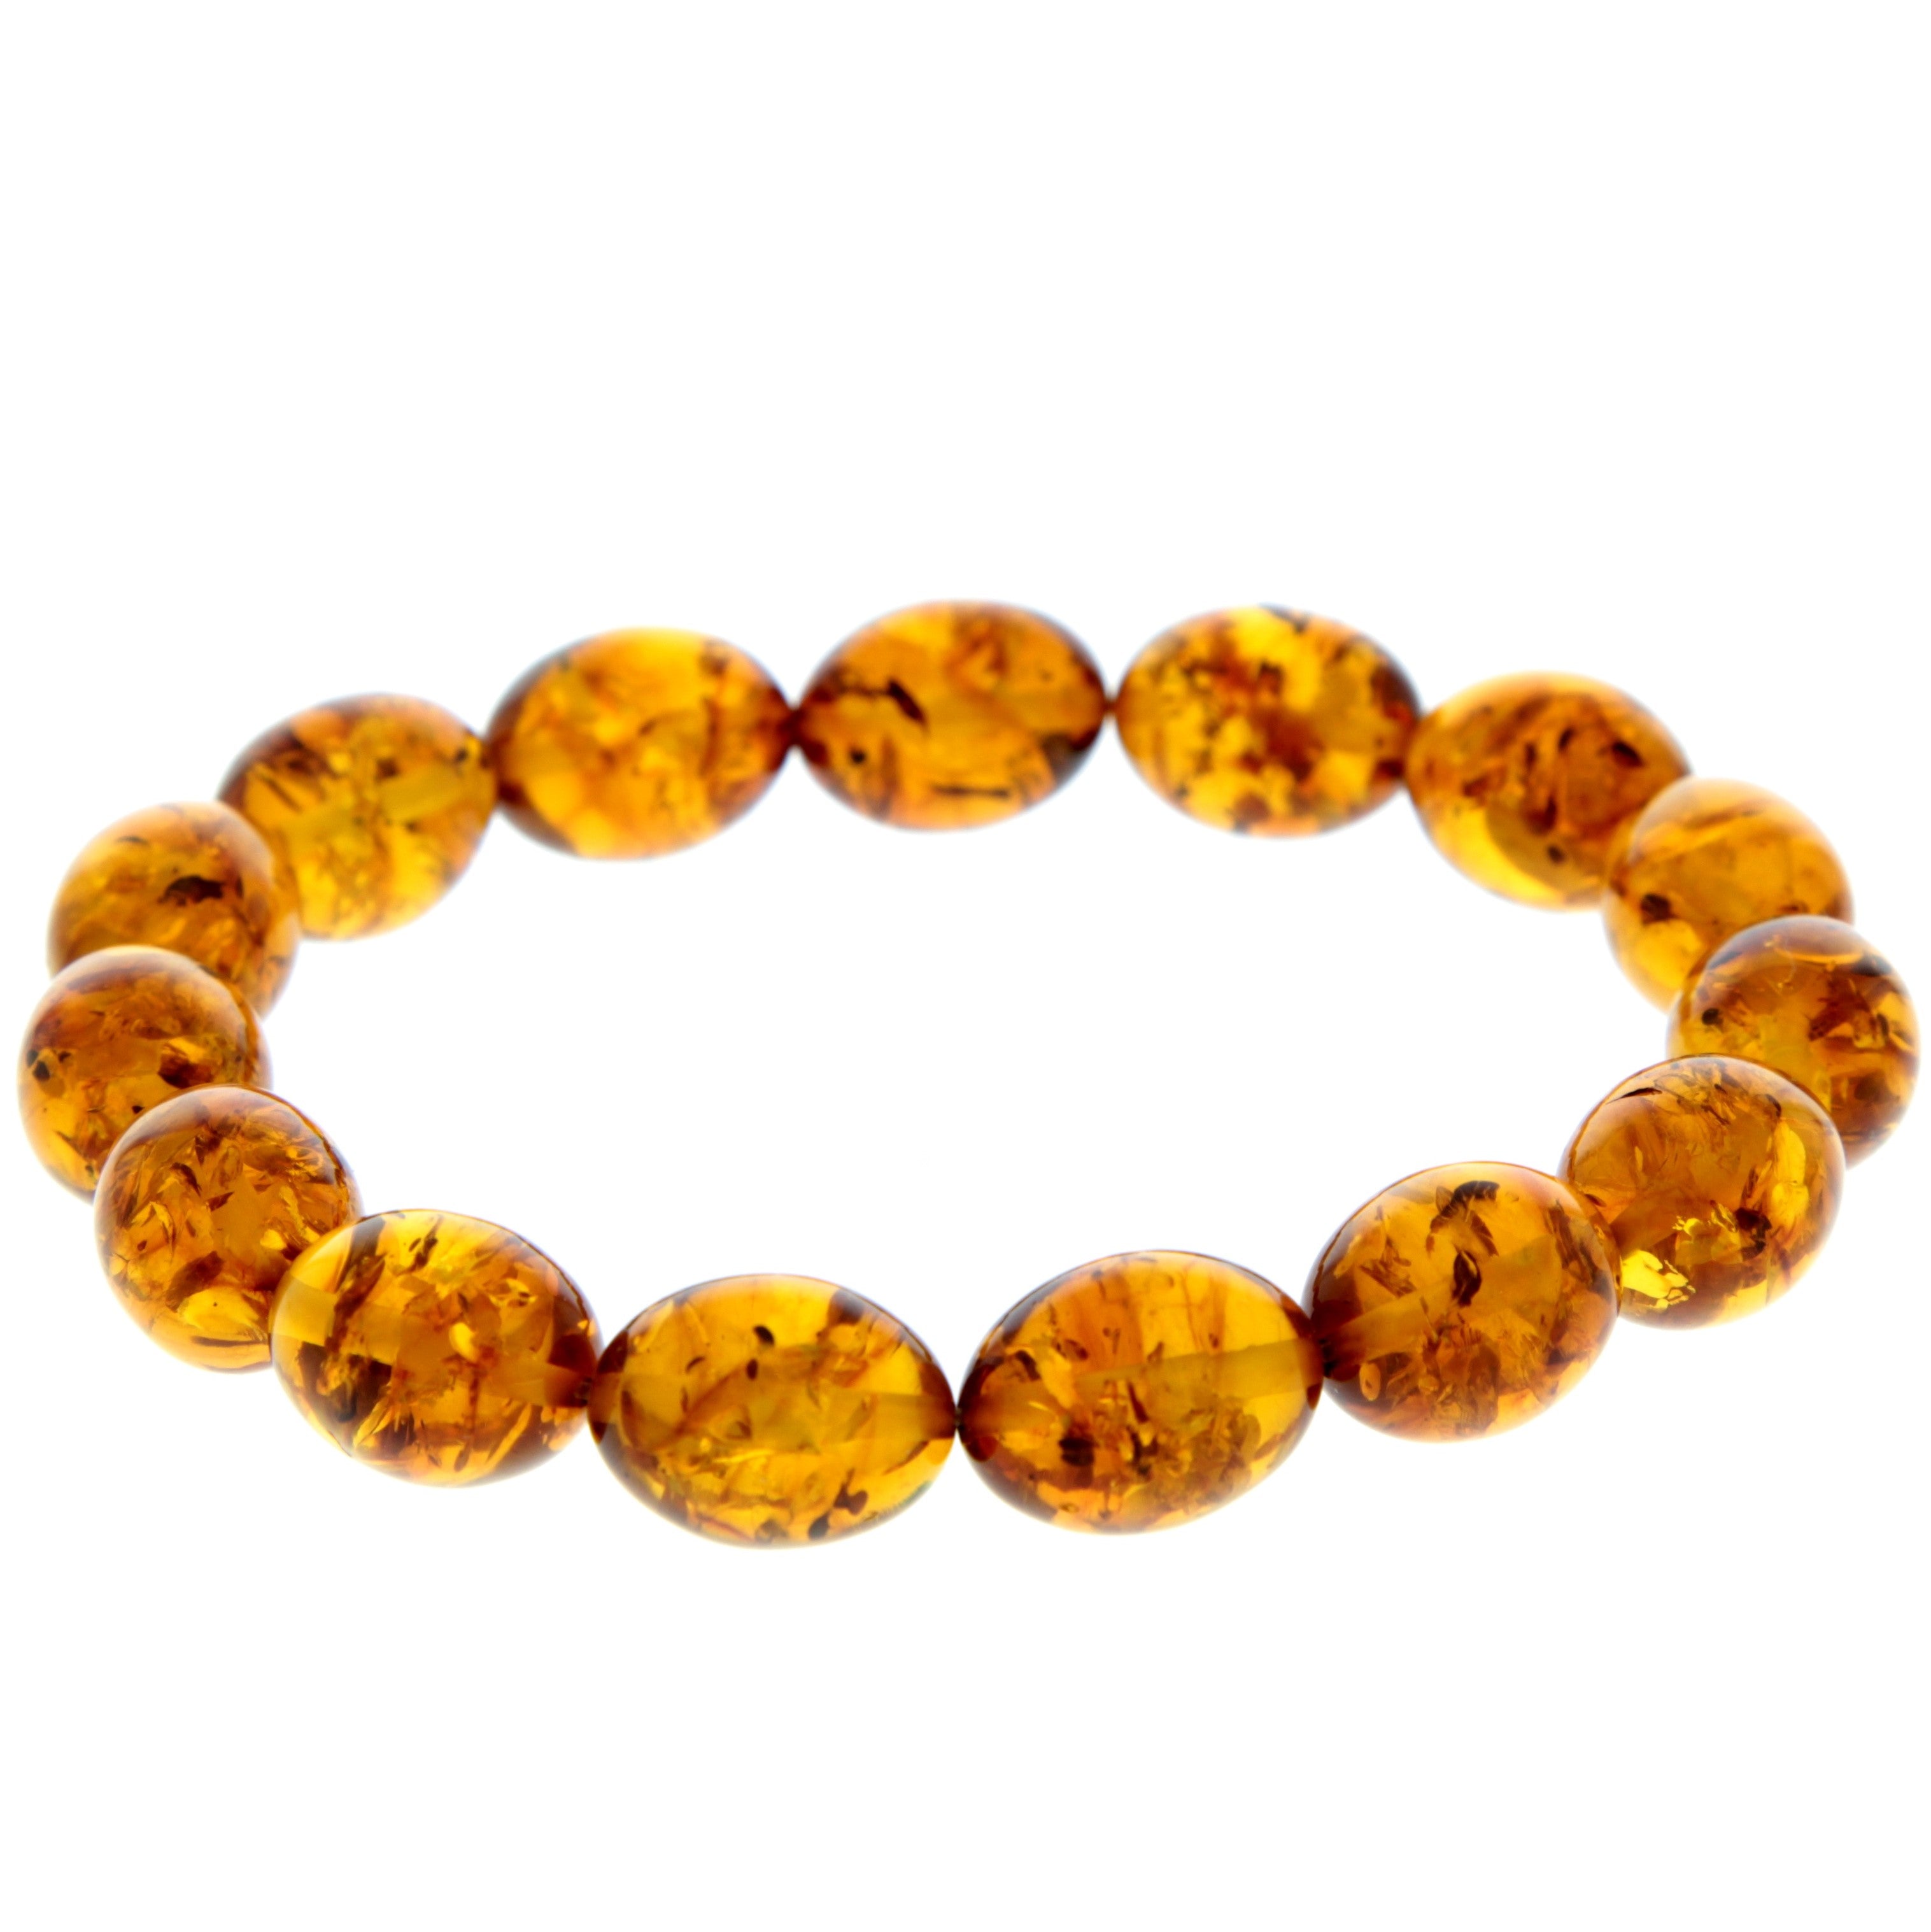 Genuine Baltic Amber Elastic Bracelet for Women - Oval Olive Amber Beads 12x10 mm - BT0175